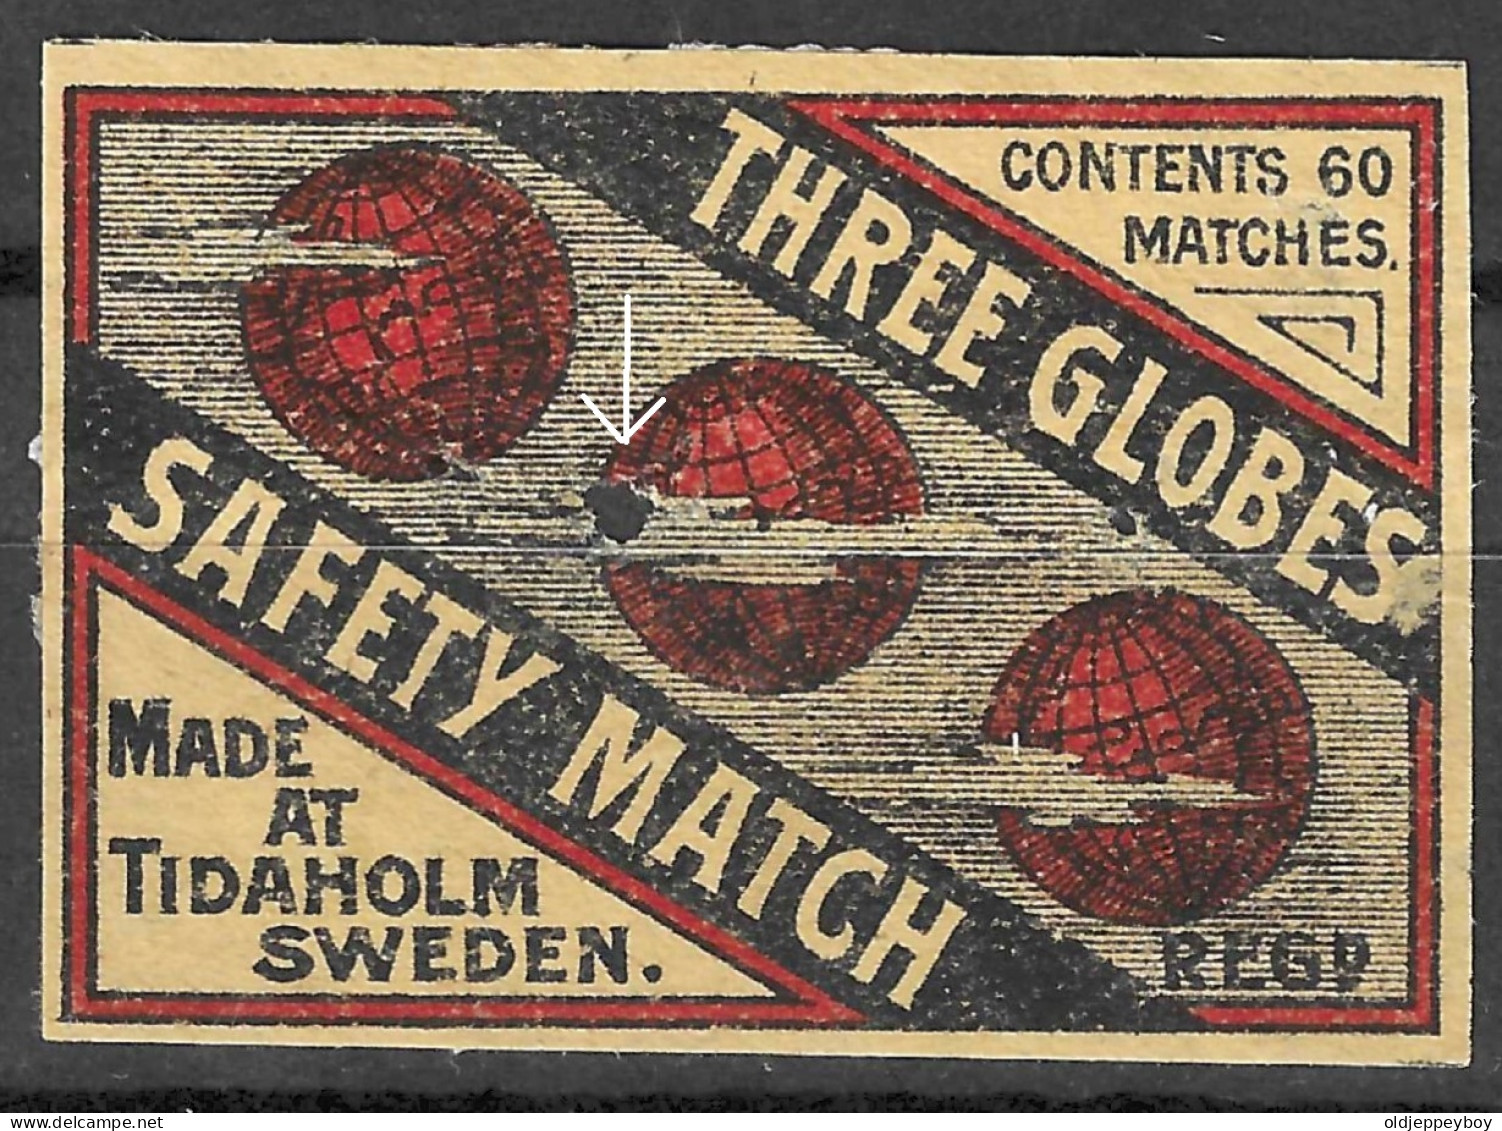  MADE  IN TIDAHOLM SWEDEN VINTAGE Phillumeny MATCHBOX LABEL THREE GLOBES  5  X 3.5 CM  SMALL HOLE AS INDICATED IN SCAN - Luciferdozen - Etiketten